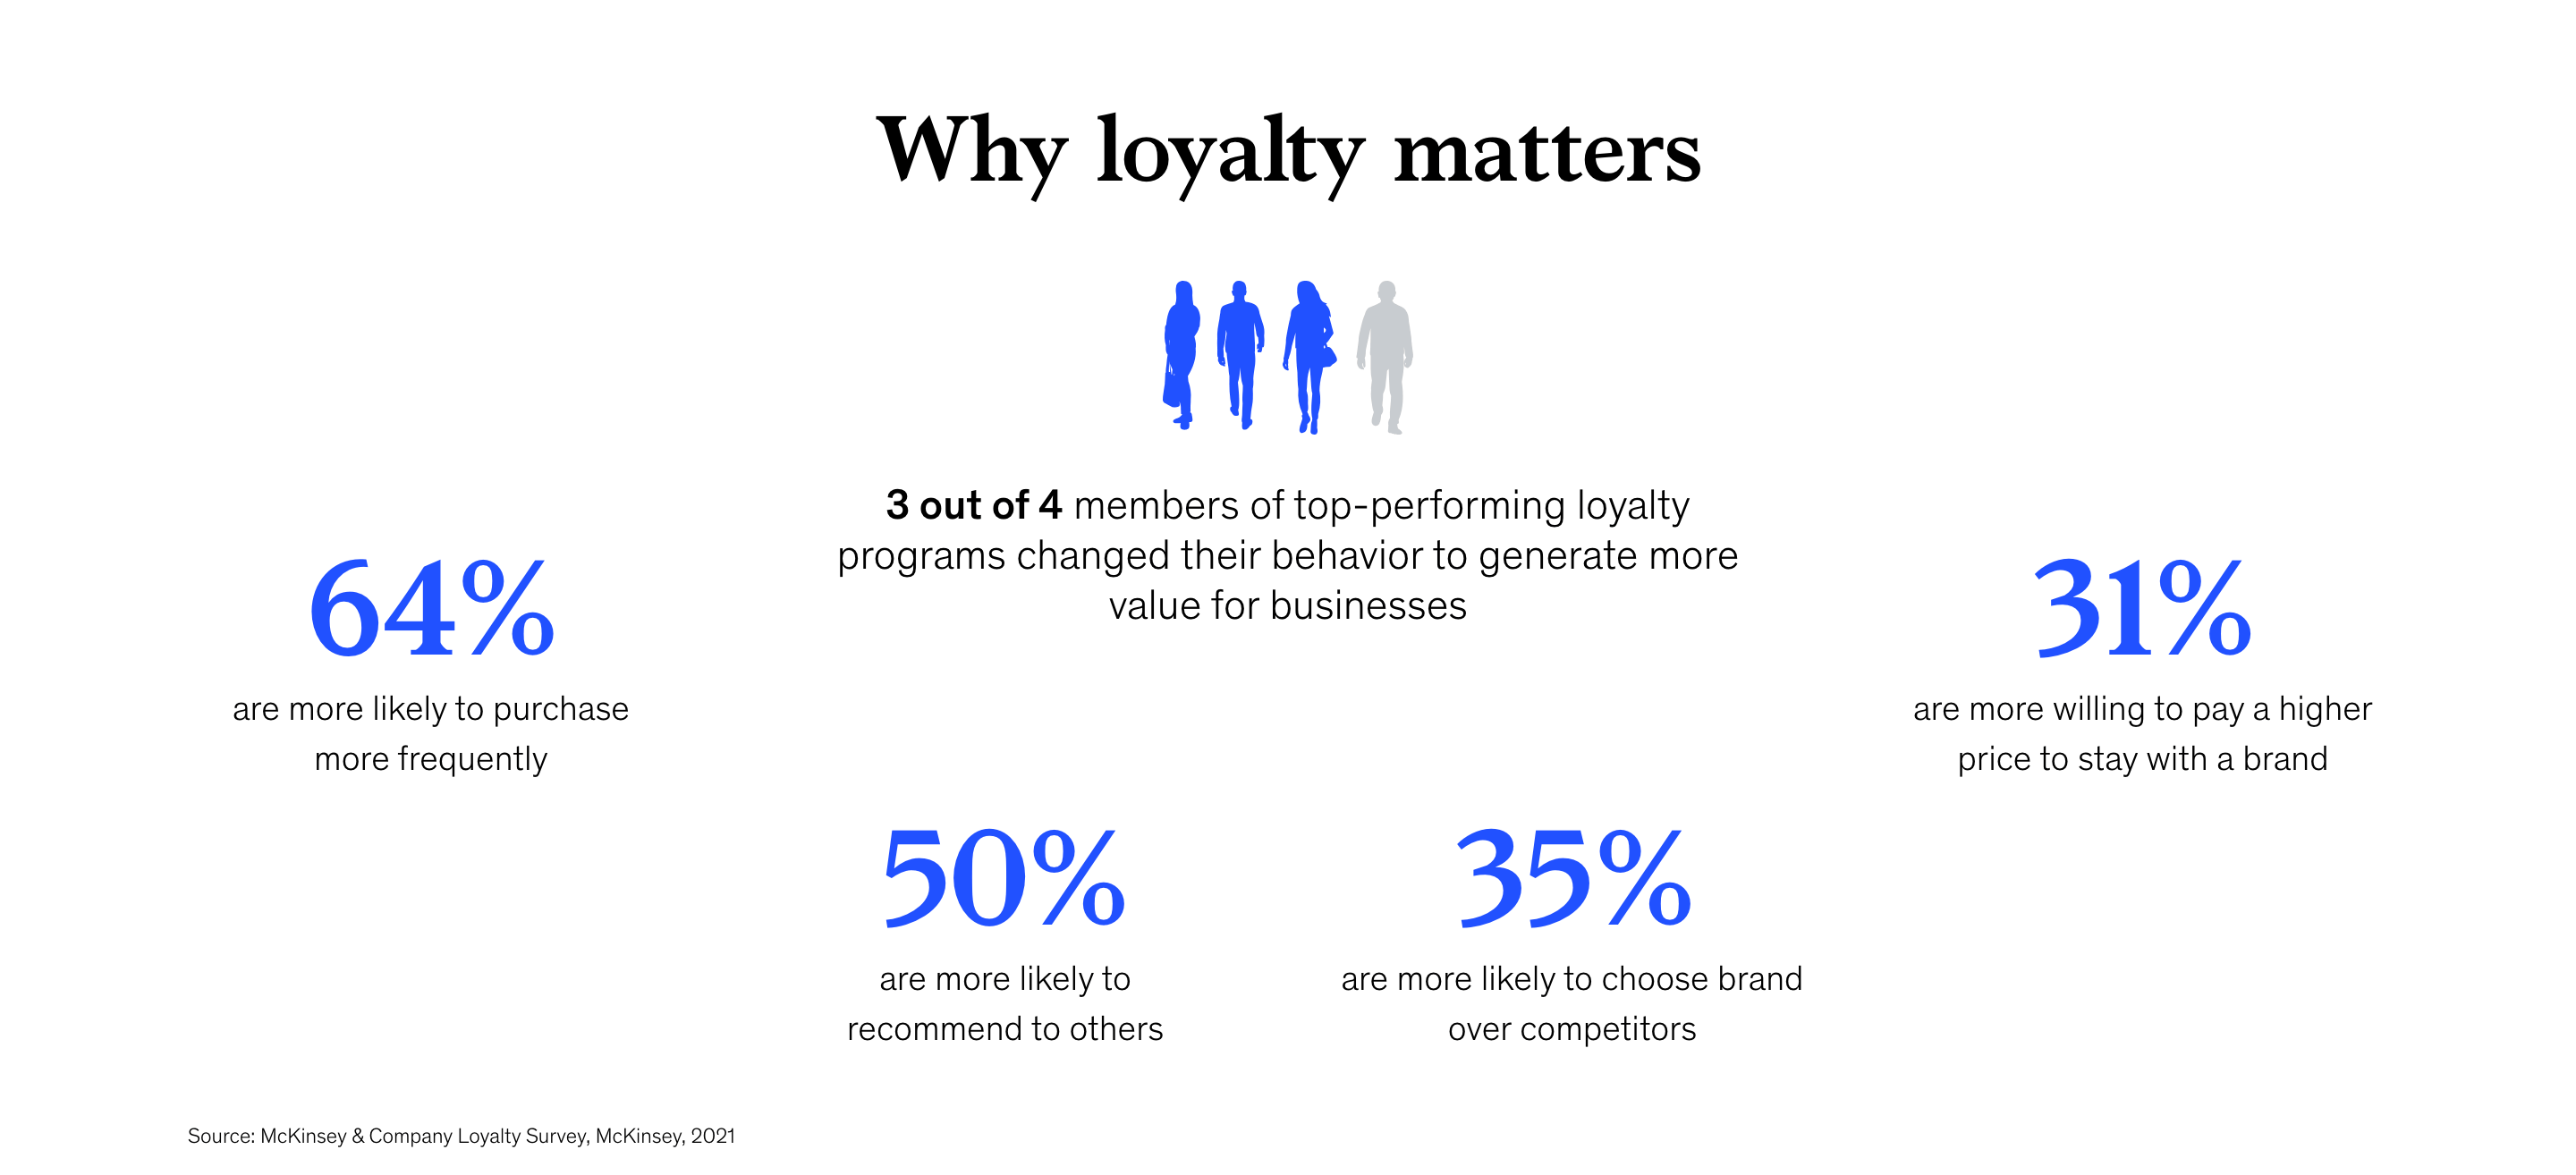 buliding-customer-loyalty-loyalty-programs